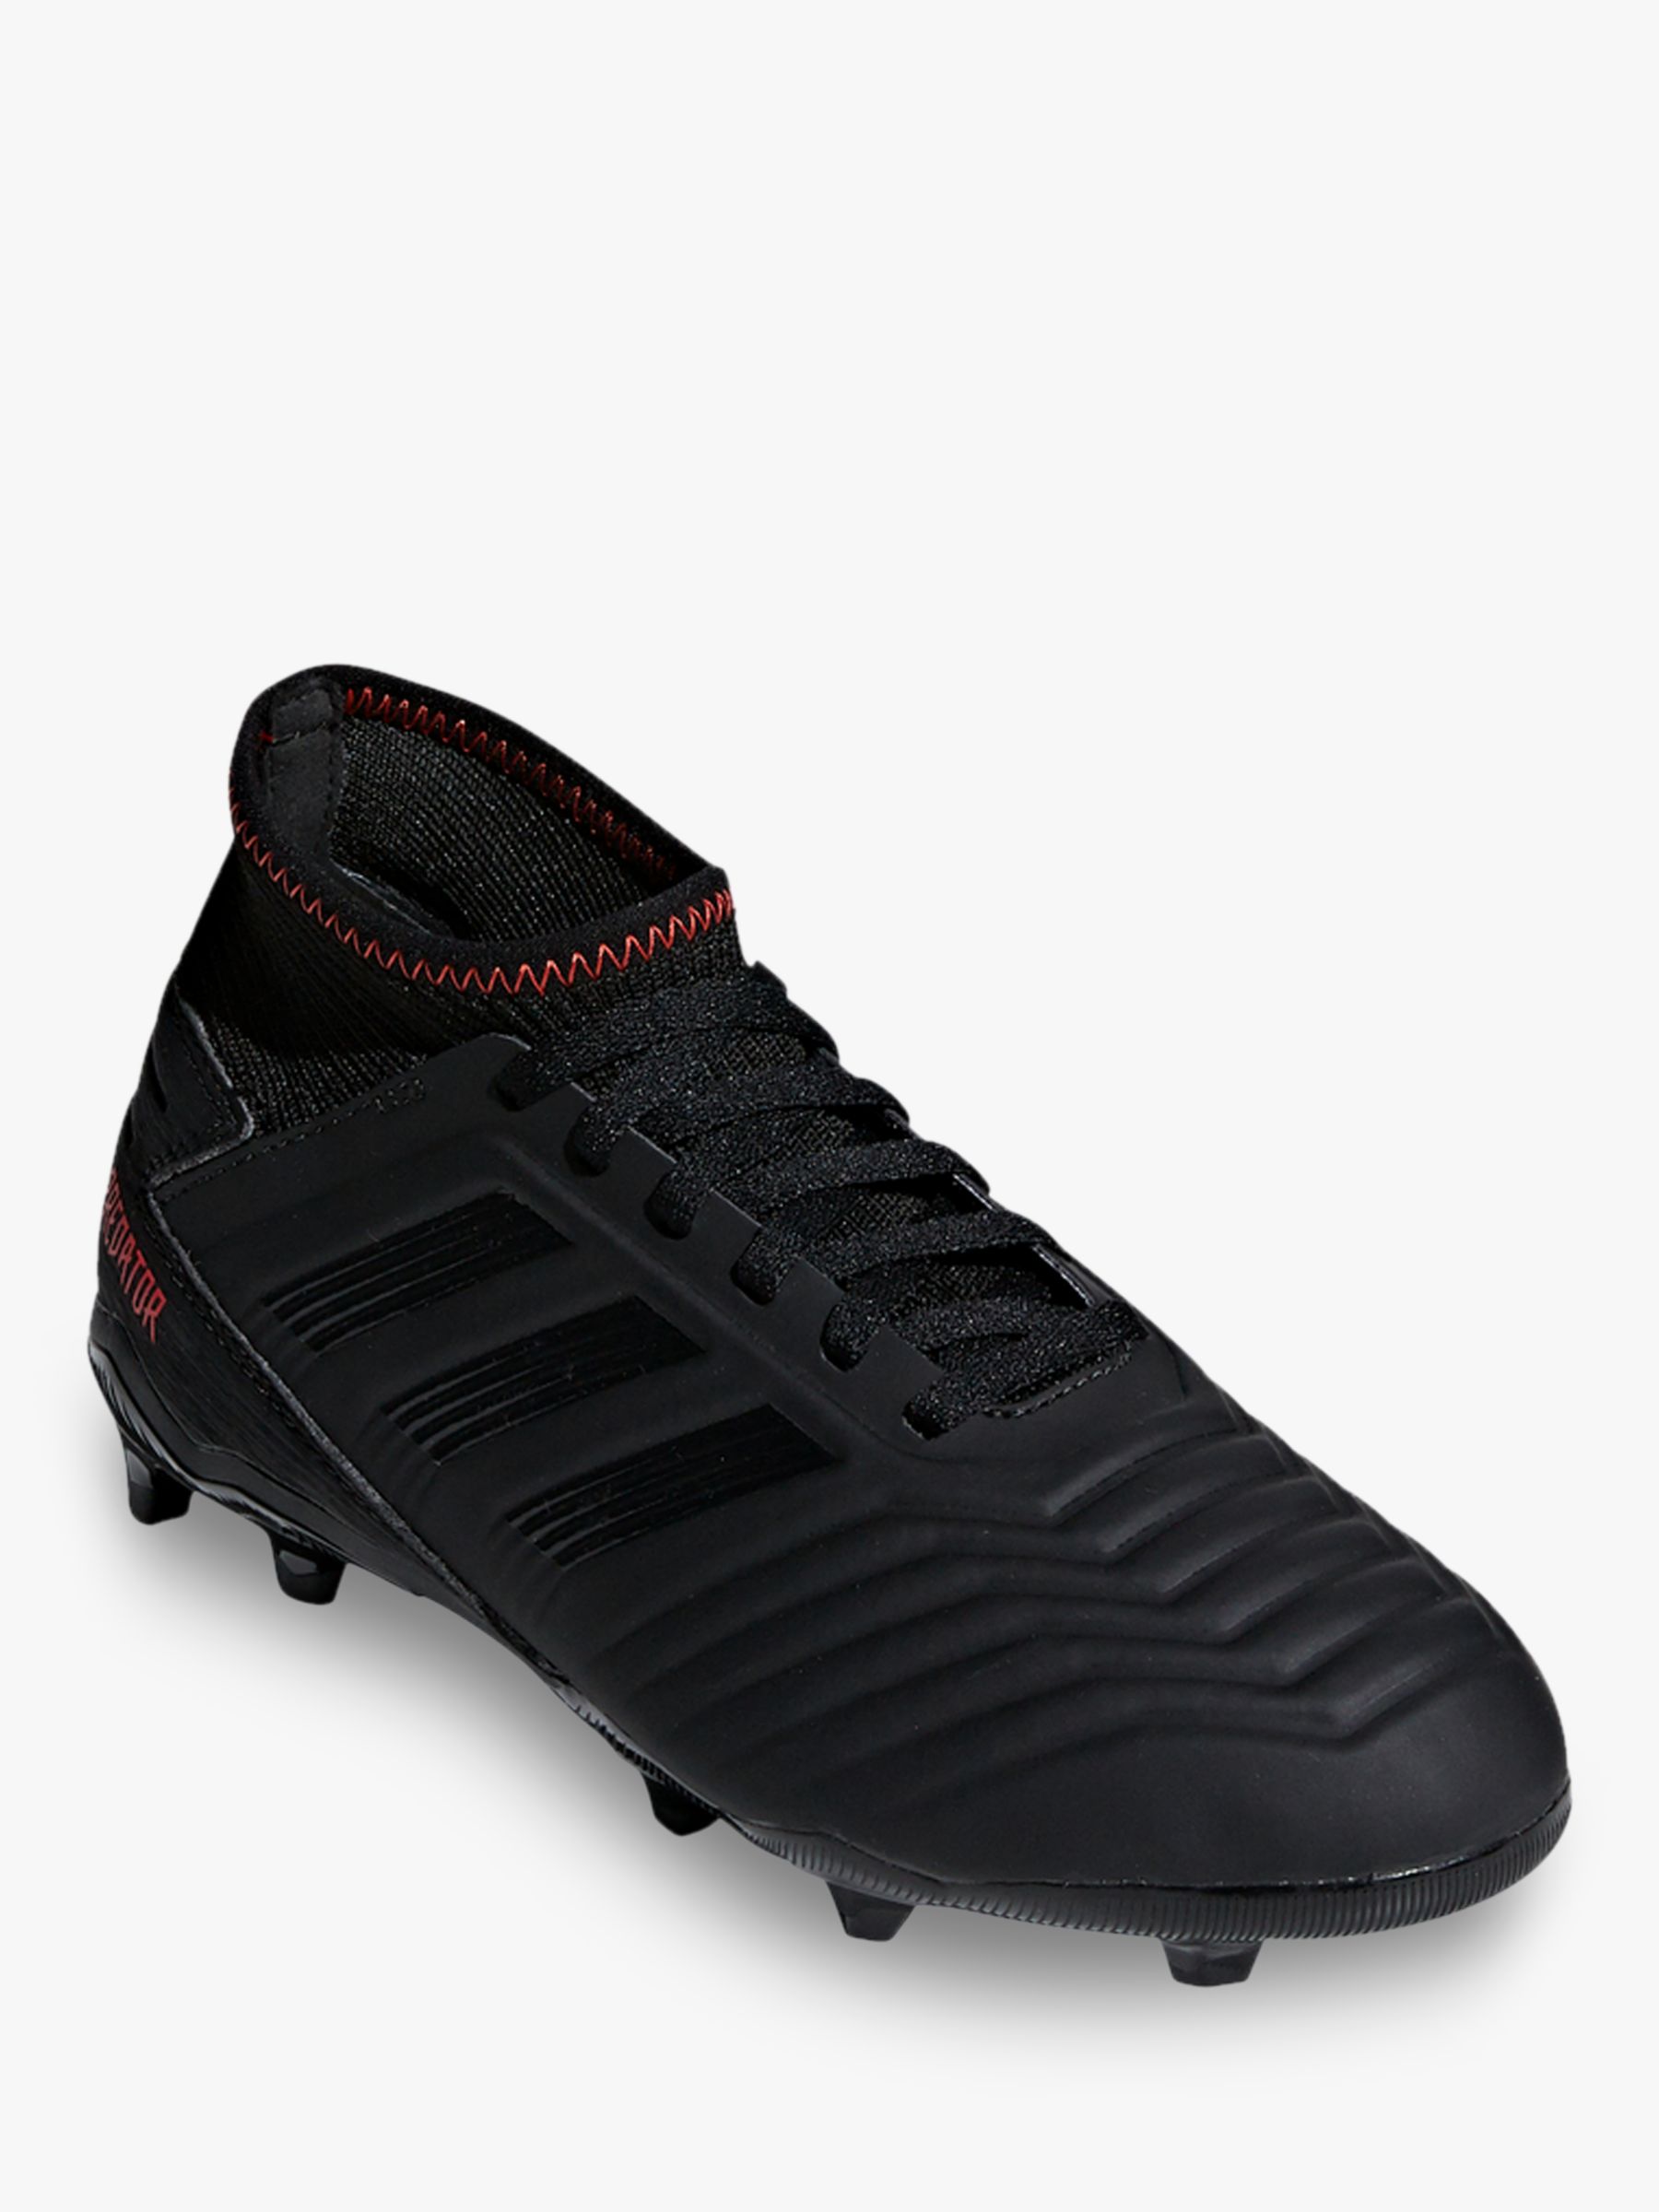 adidas black predator boots